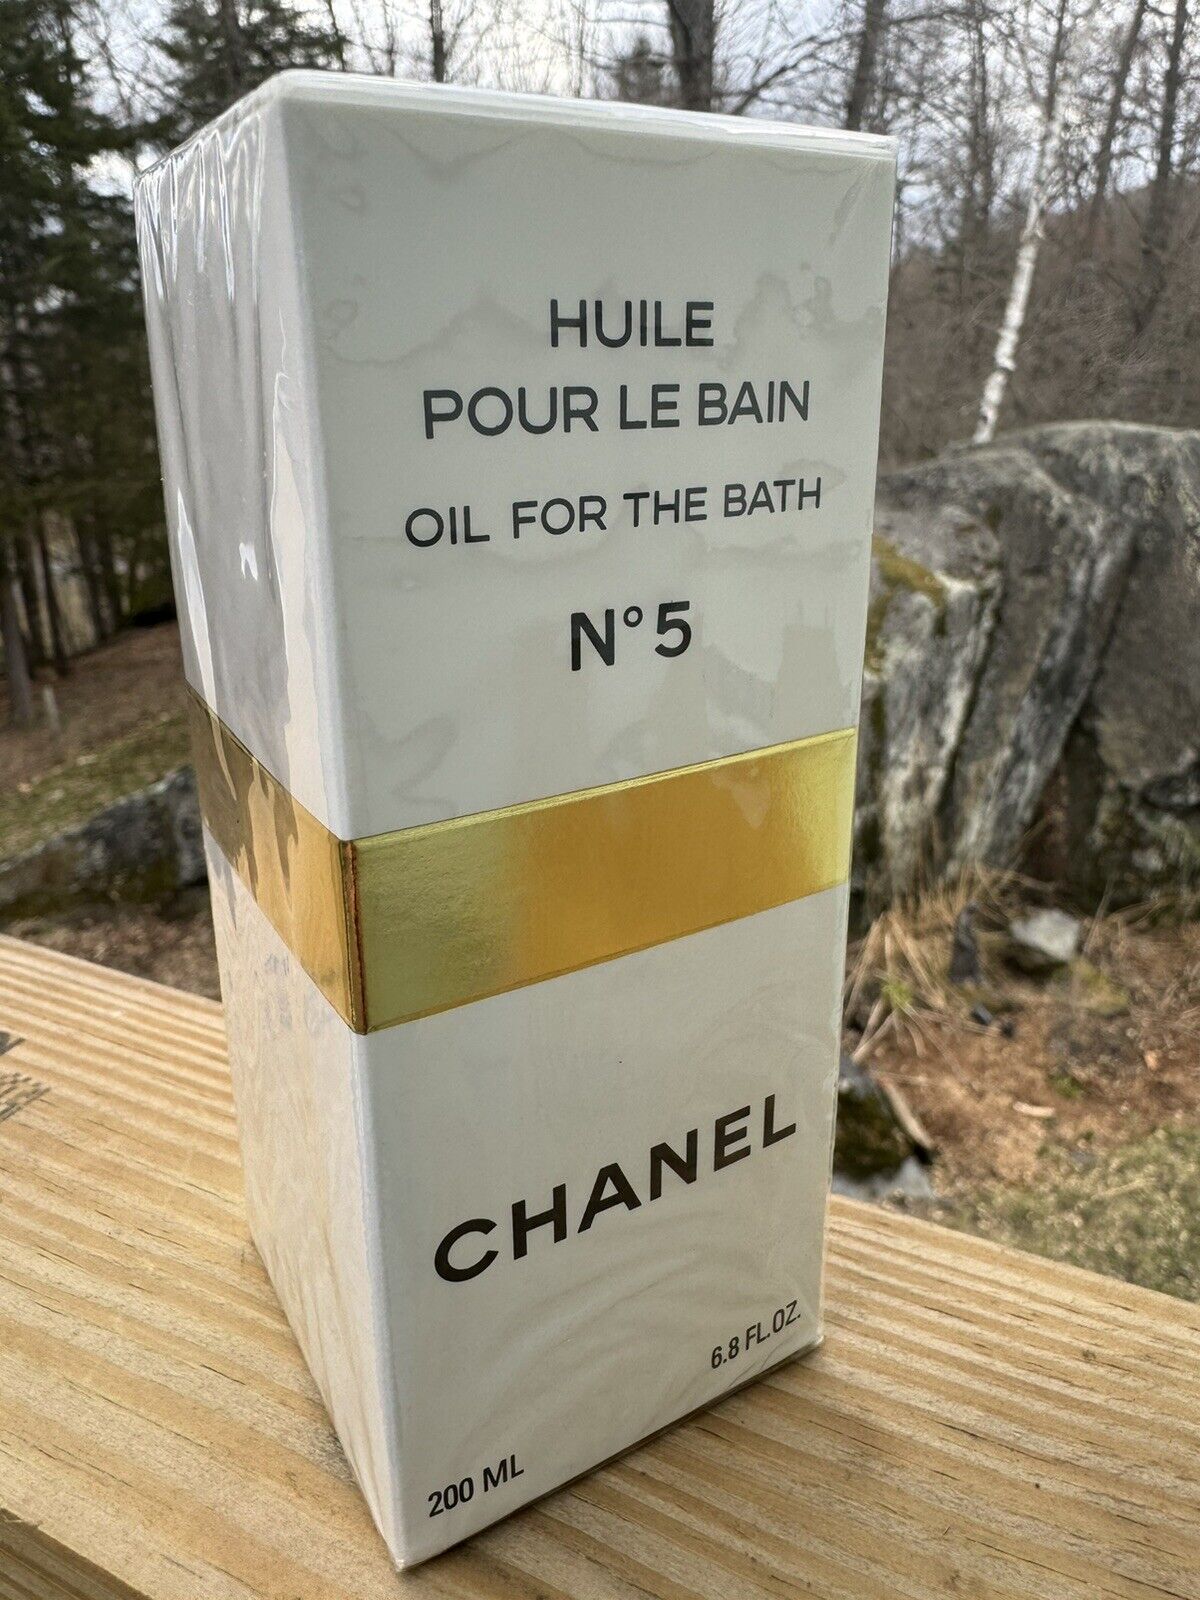 Chanel N° 5 : Huile Pour Le Bain Oil for the Bath 200 ML Factory Sealed VINTAGE